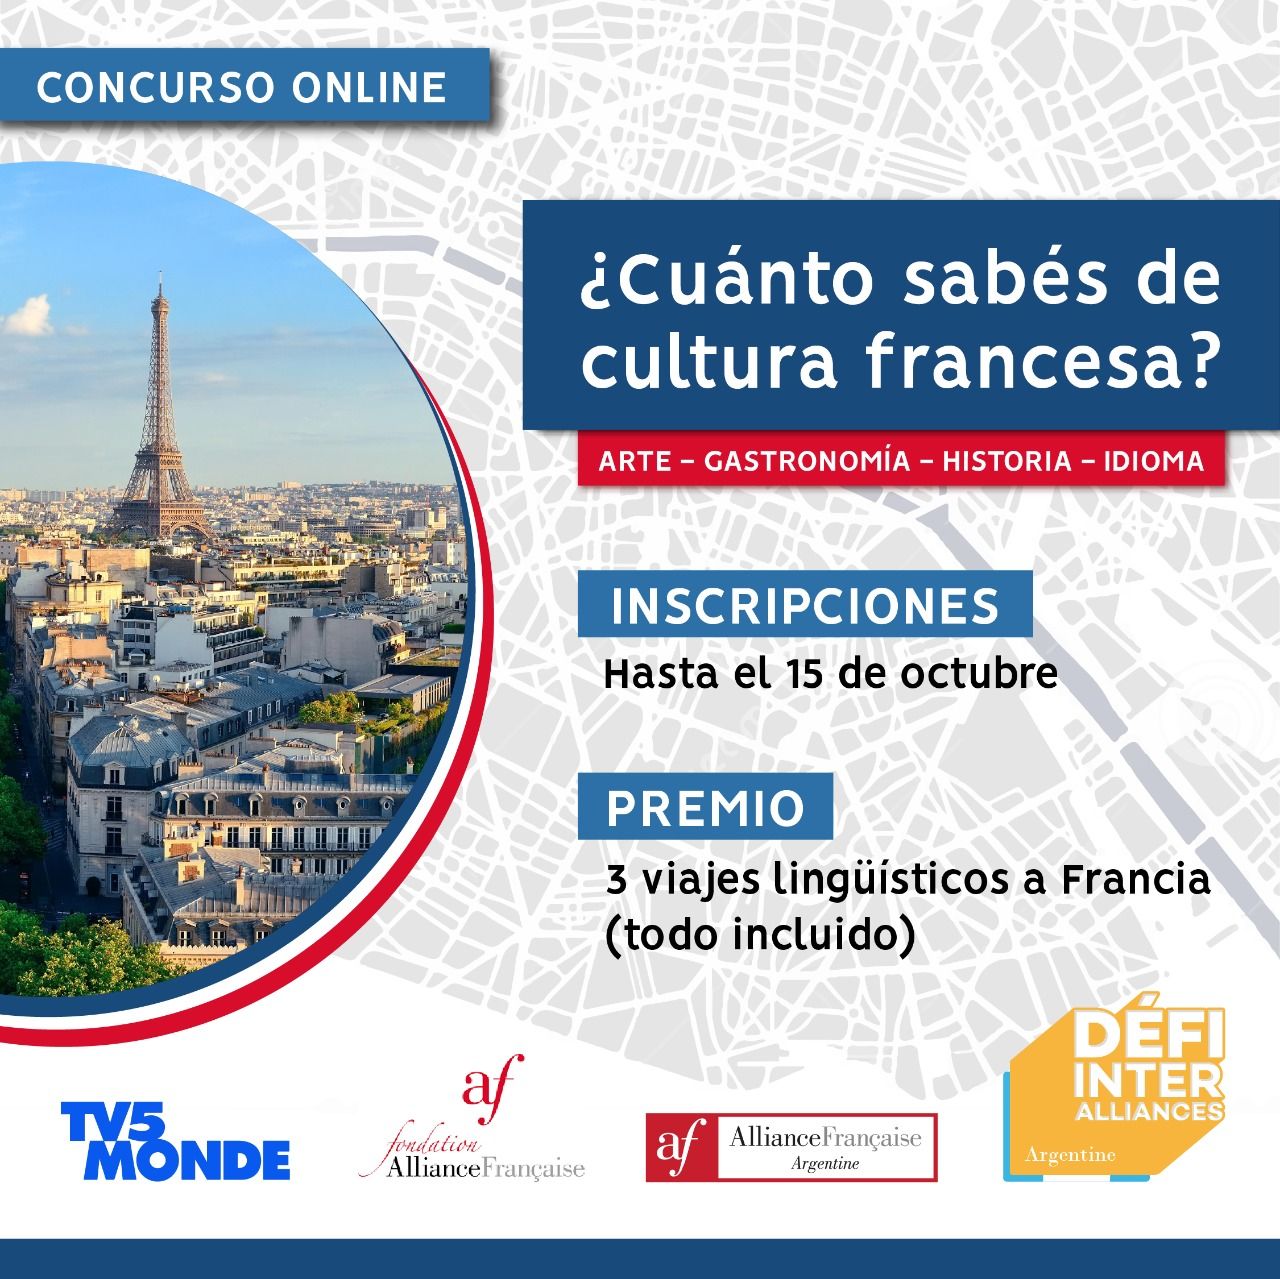 Concurso online: ¿Cuánto sabés de cultura francesa?